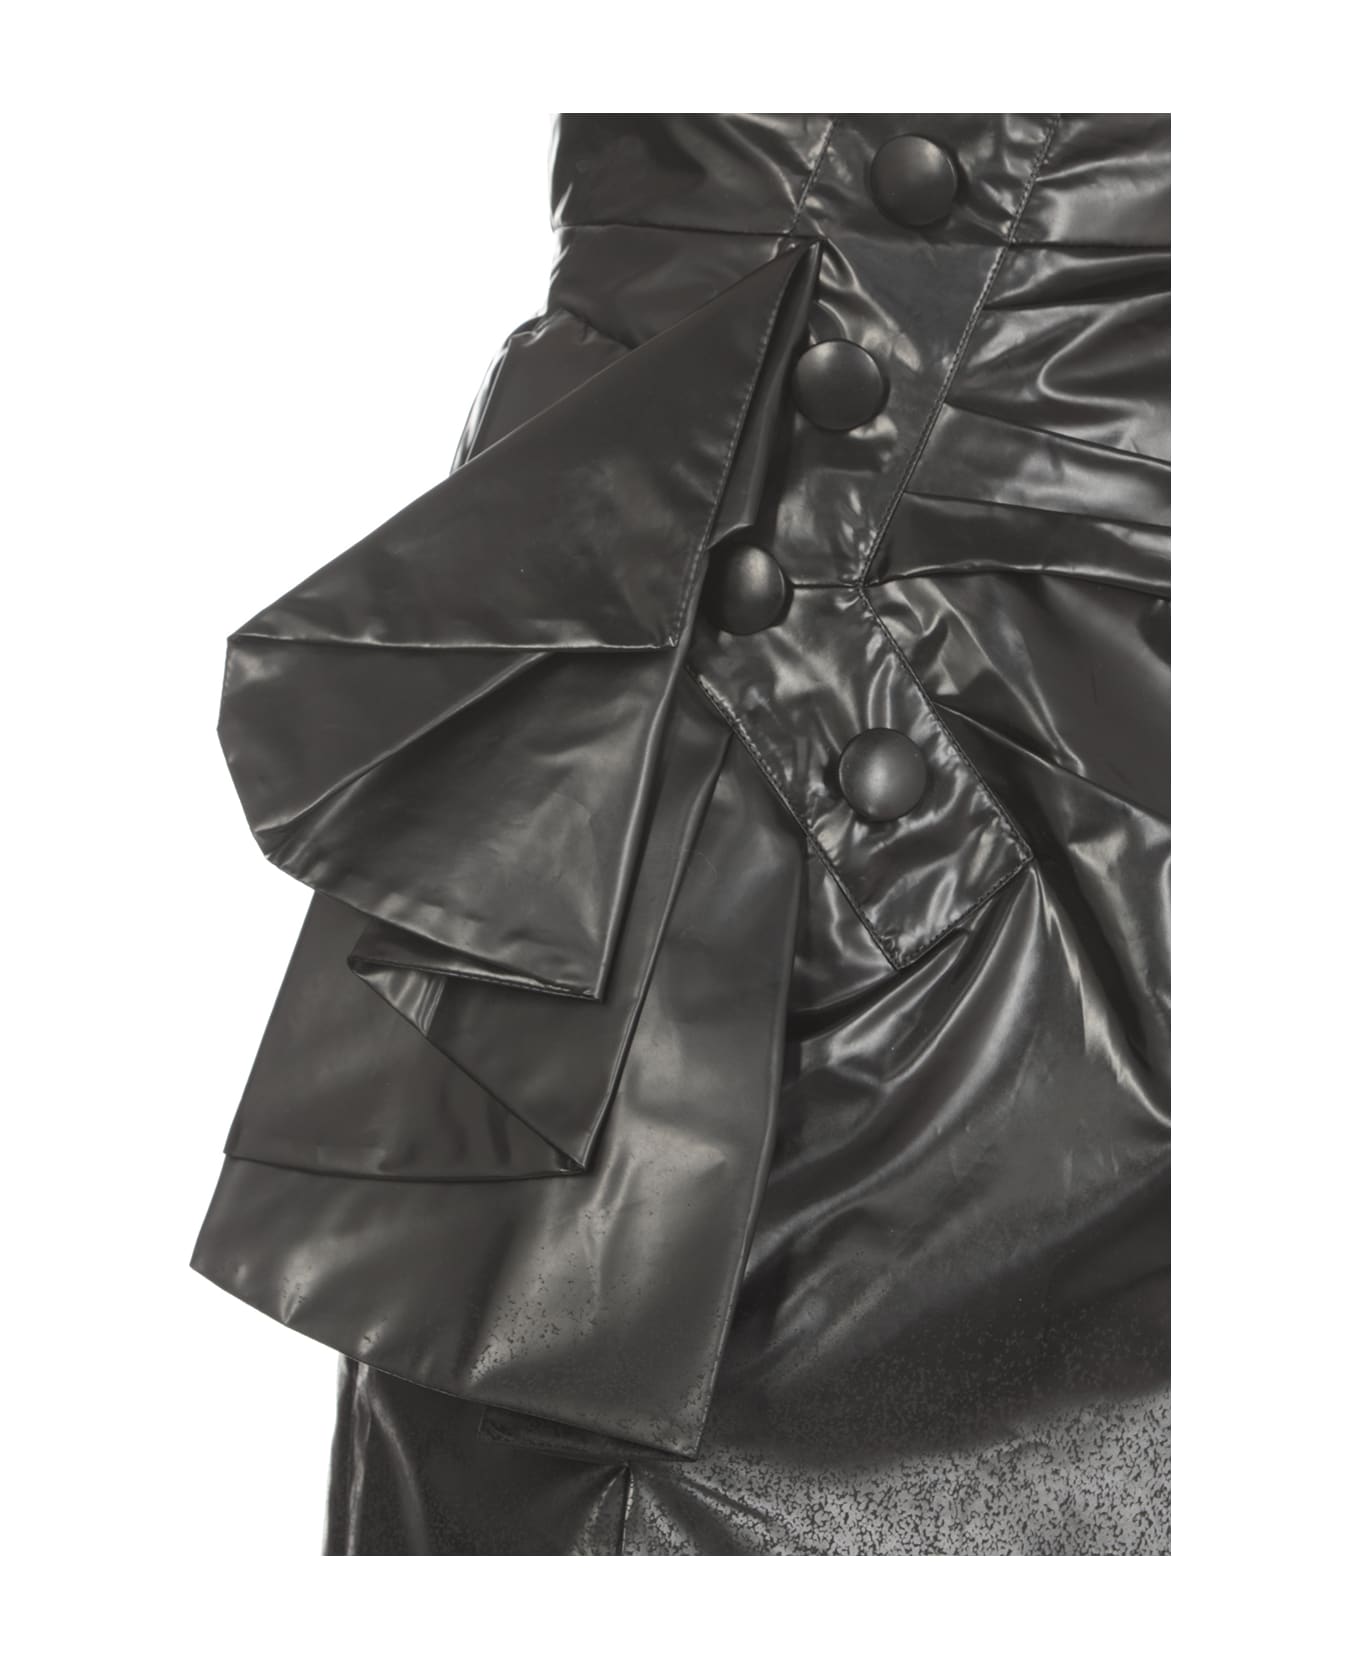 Maison Margiela Skirt With Draping - Black